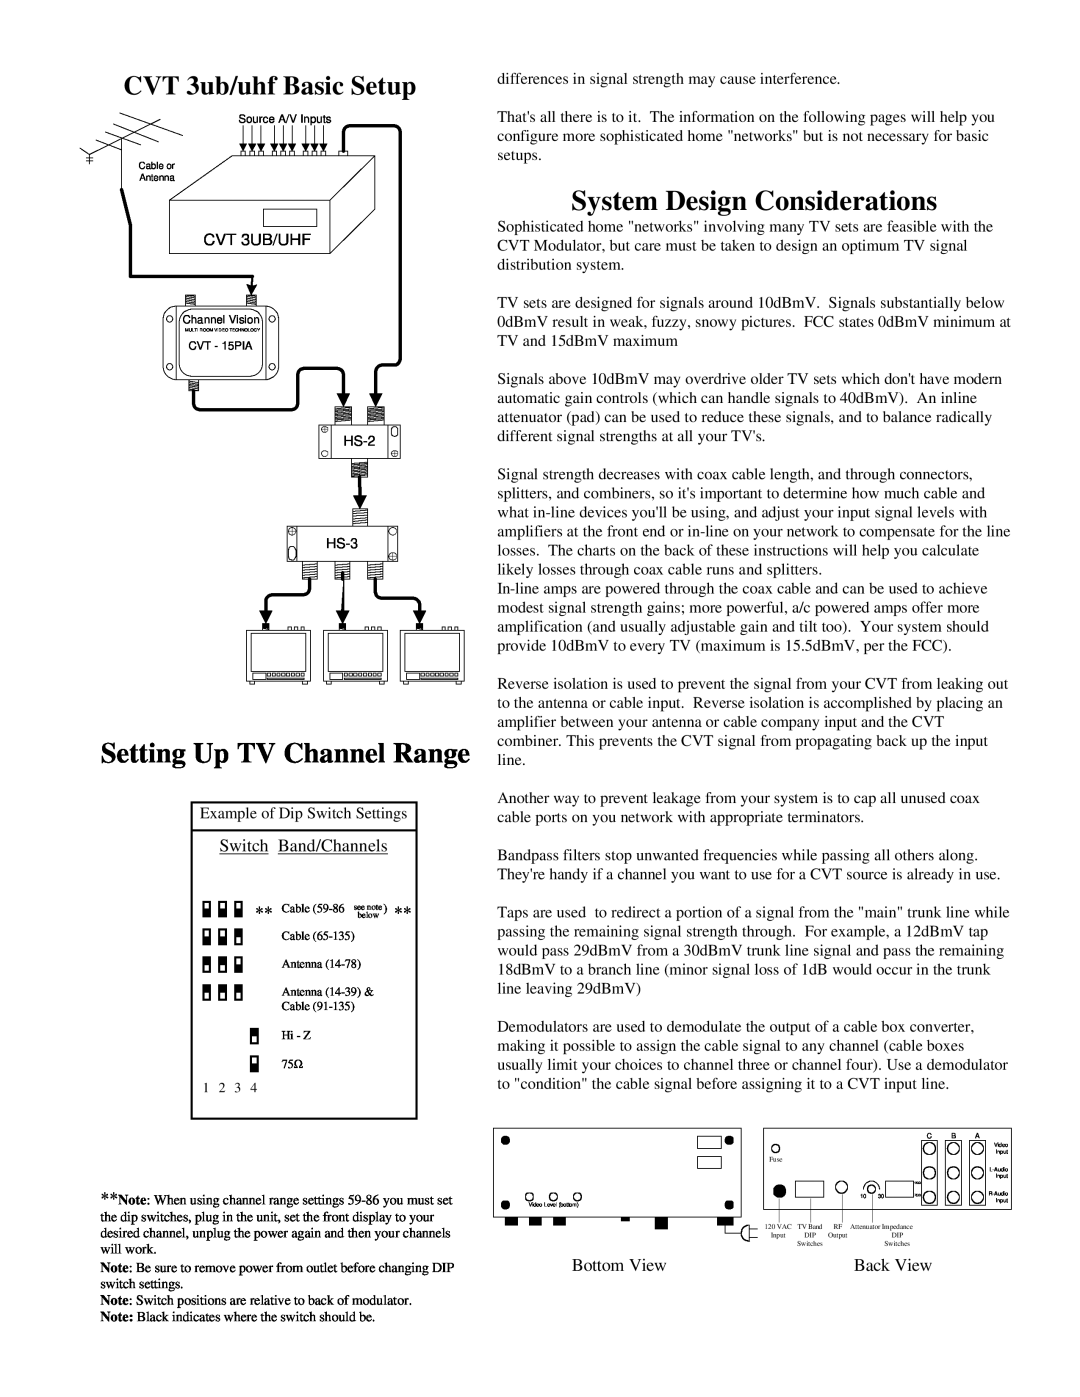 Channel Vision Stereo Receiver Setting Up TV Channel Range, System Design Considerations, CVT 3ub/uhf Basic Setup 